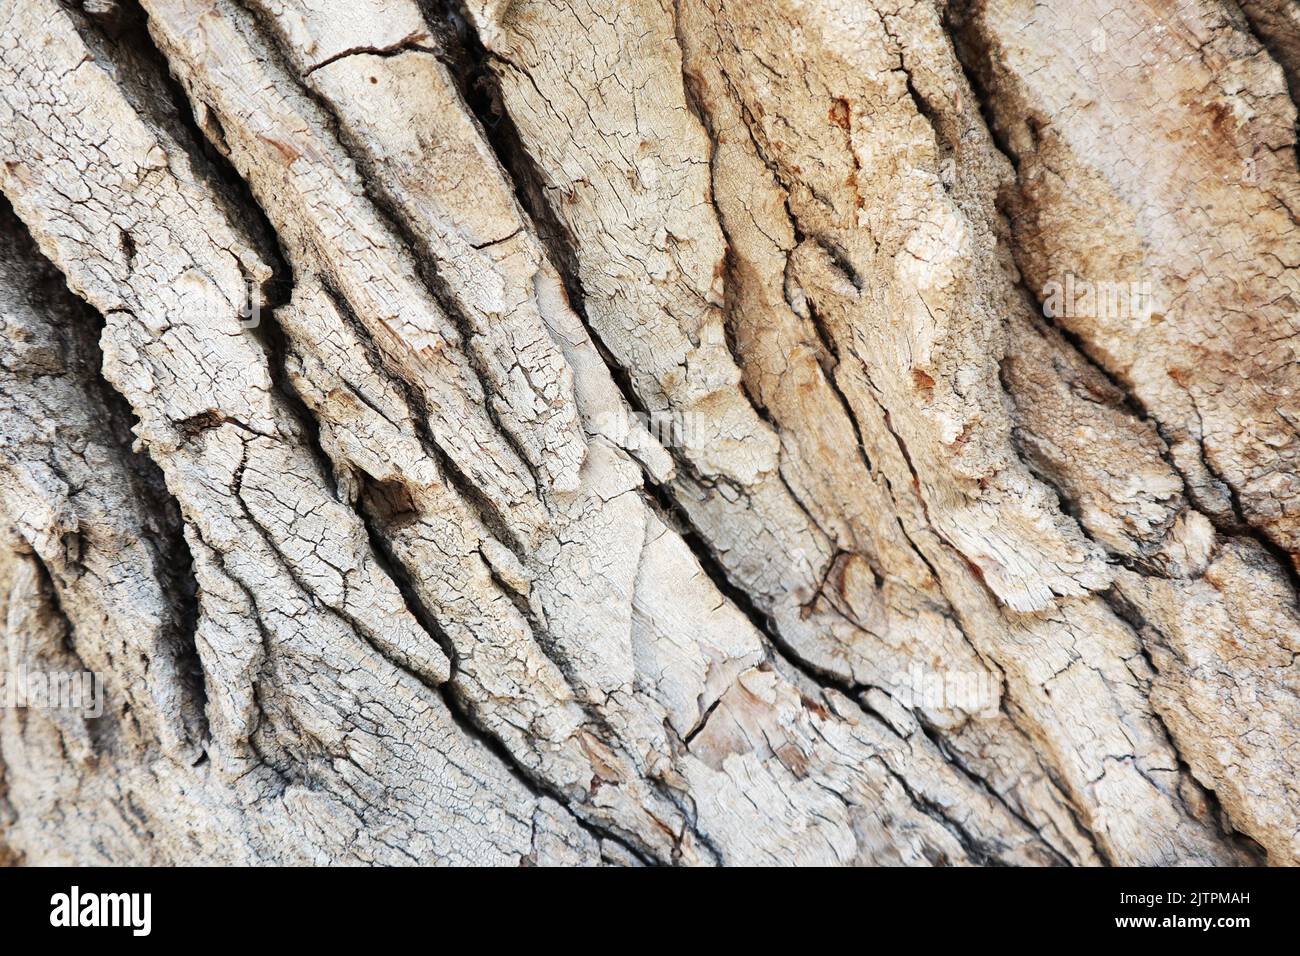 tree bark.wood texture close-up. very embossed bark Stock Photo